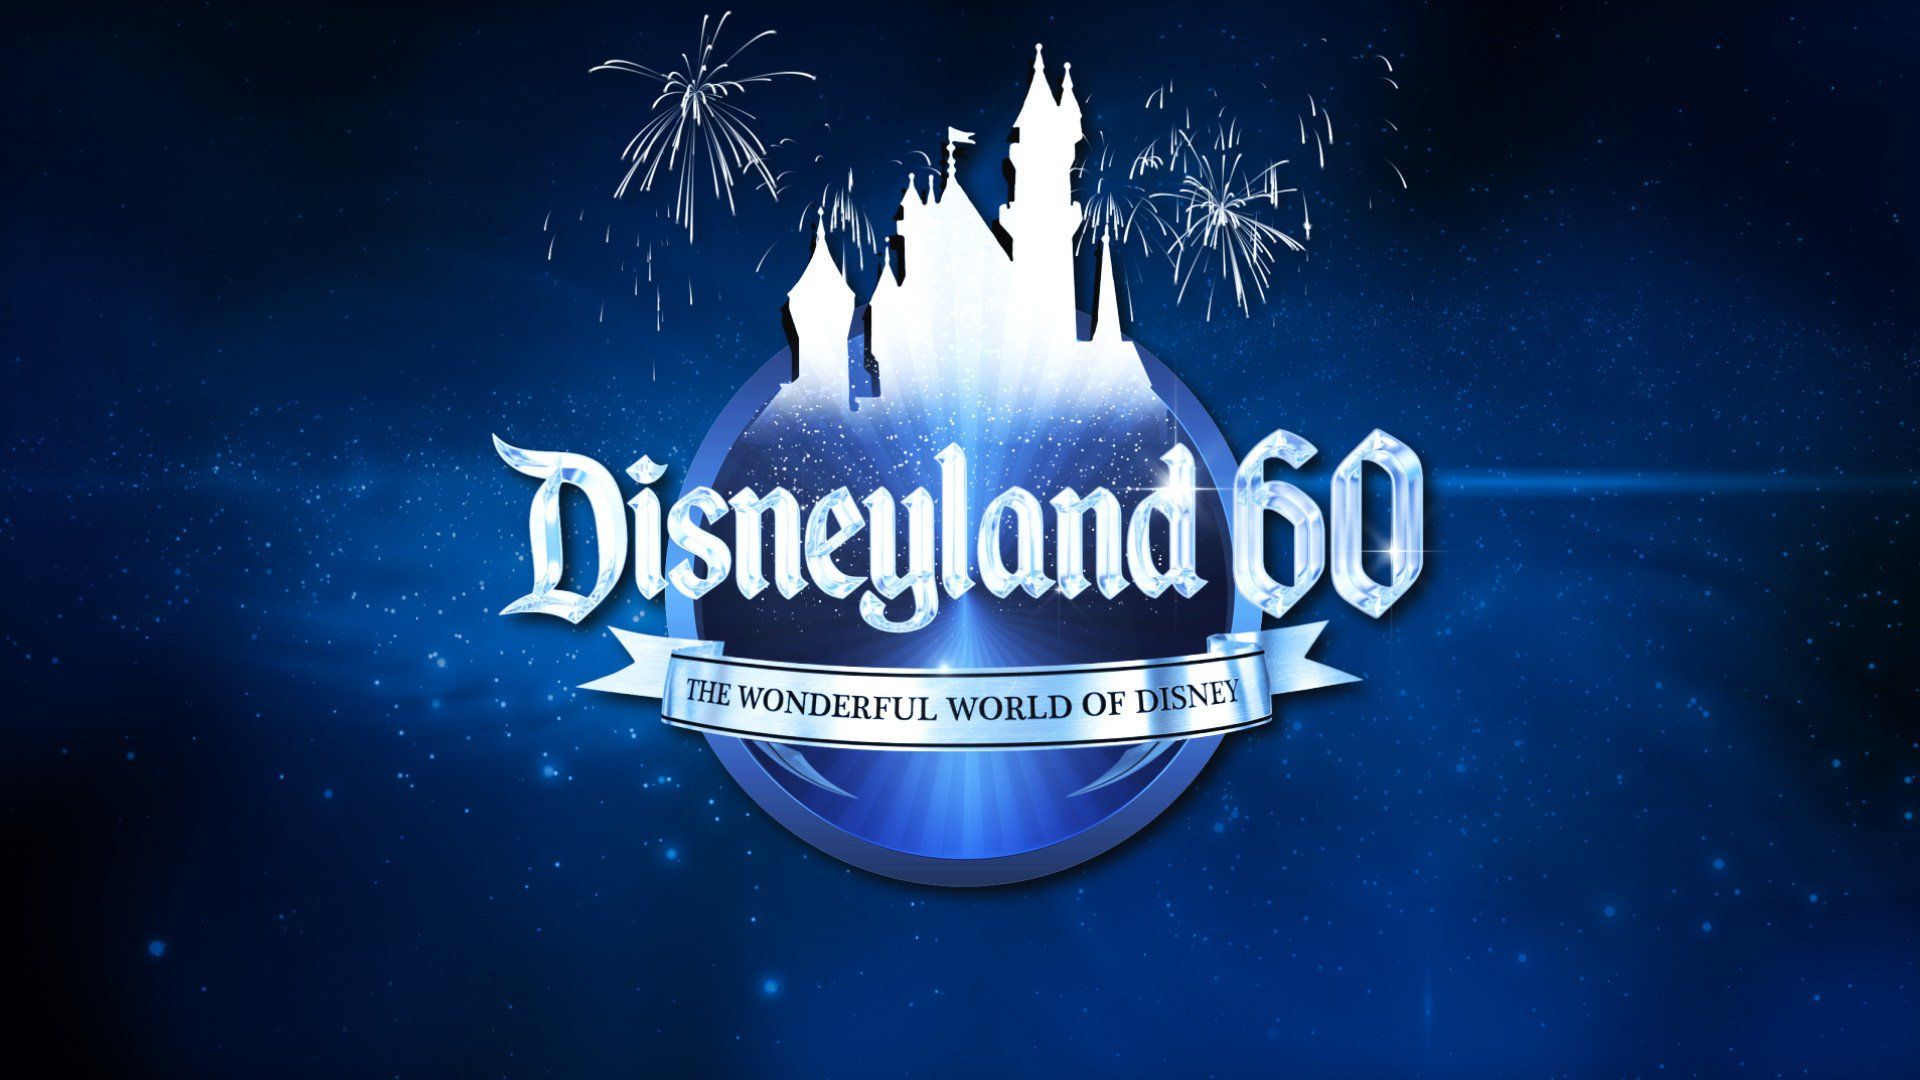 The Wonderful World of Disney: Disneyland 60 Backdrop